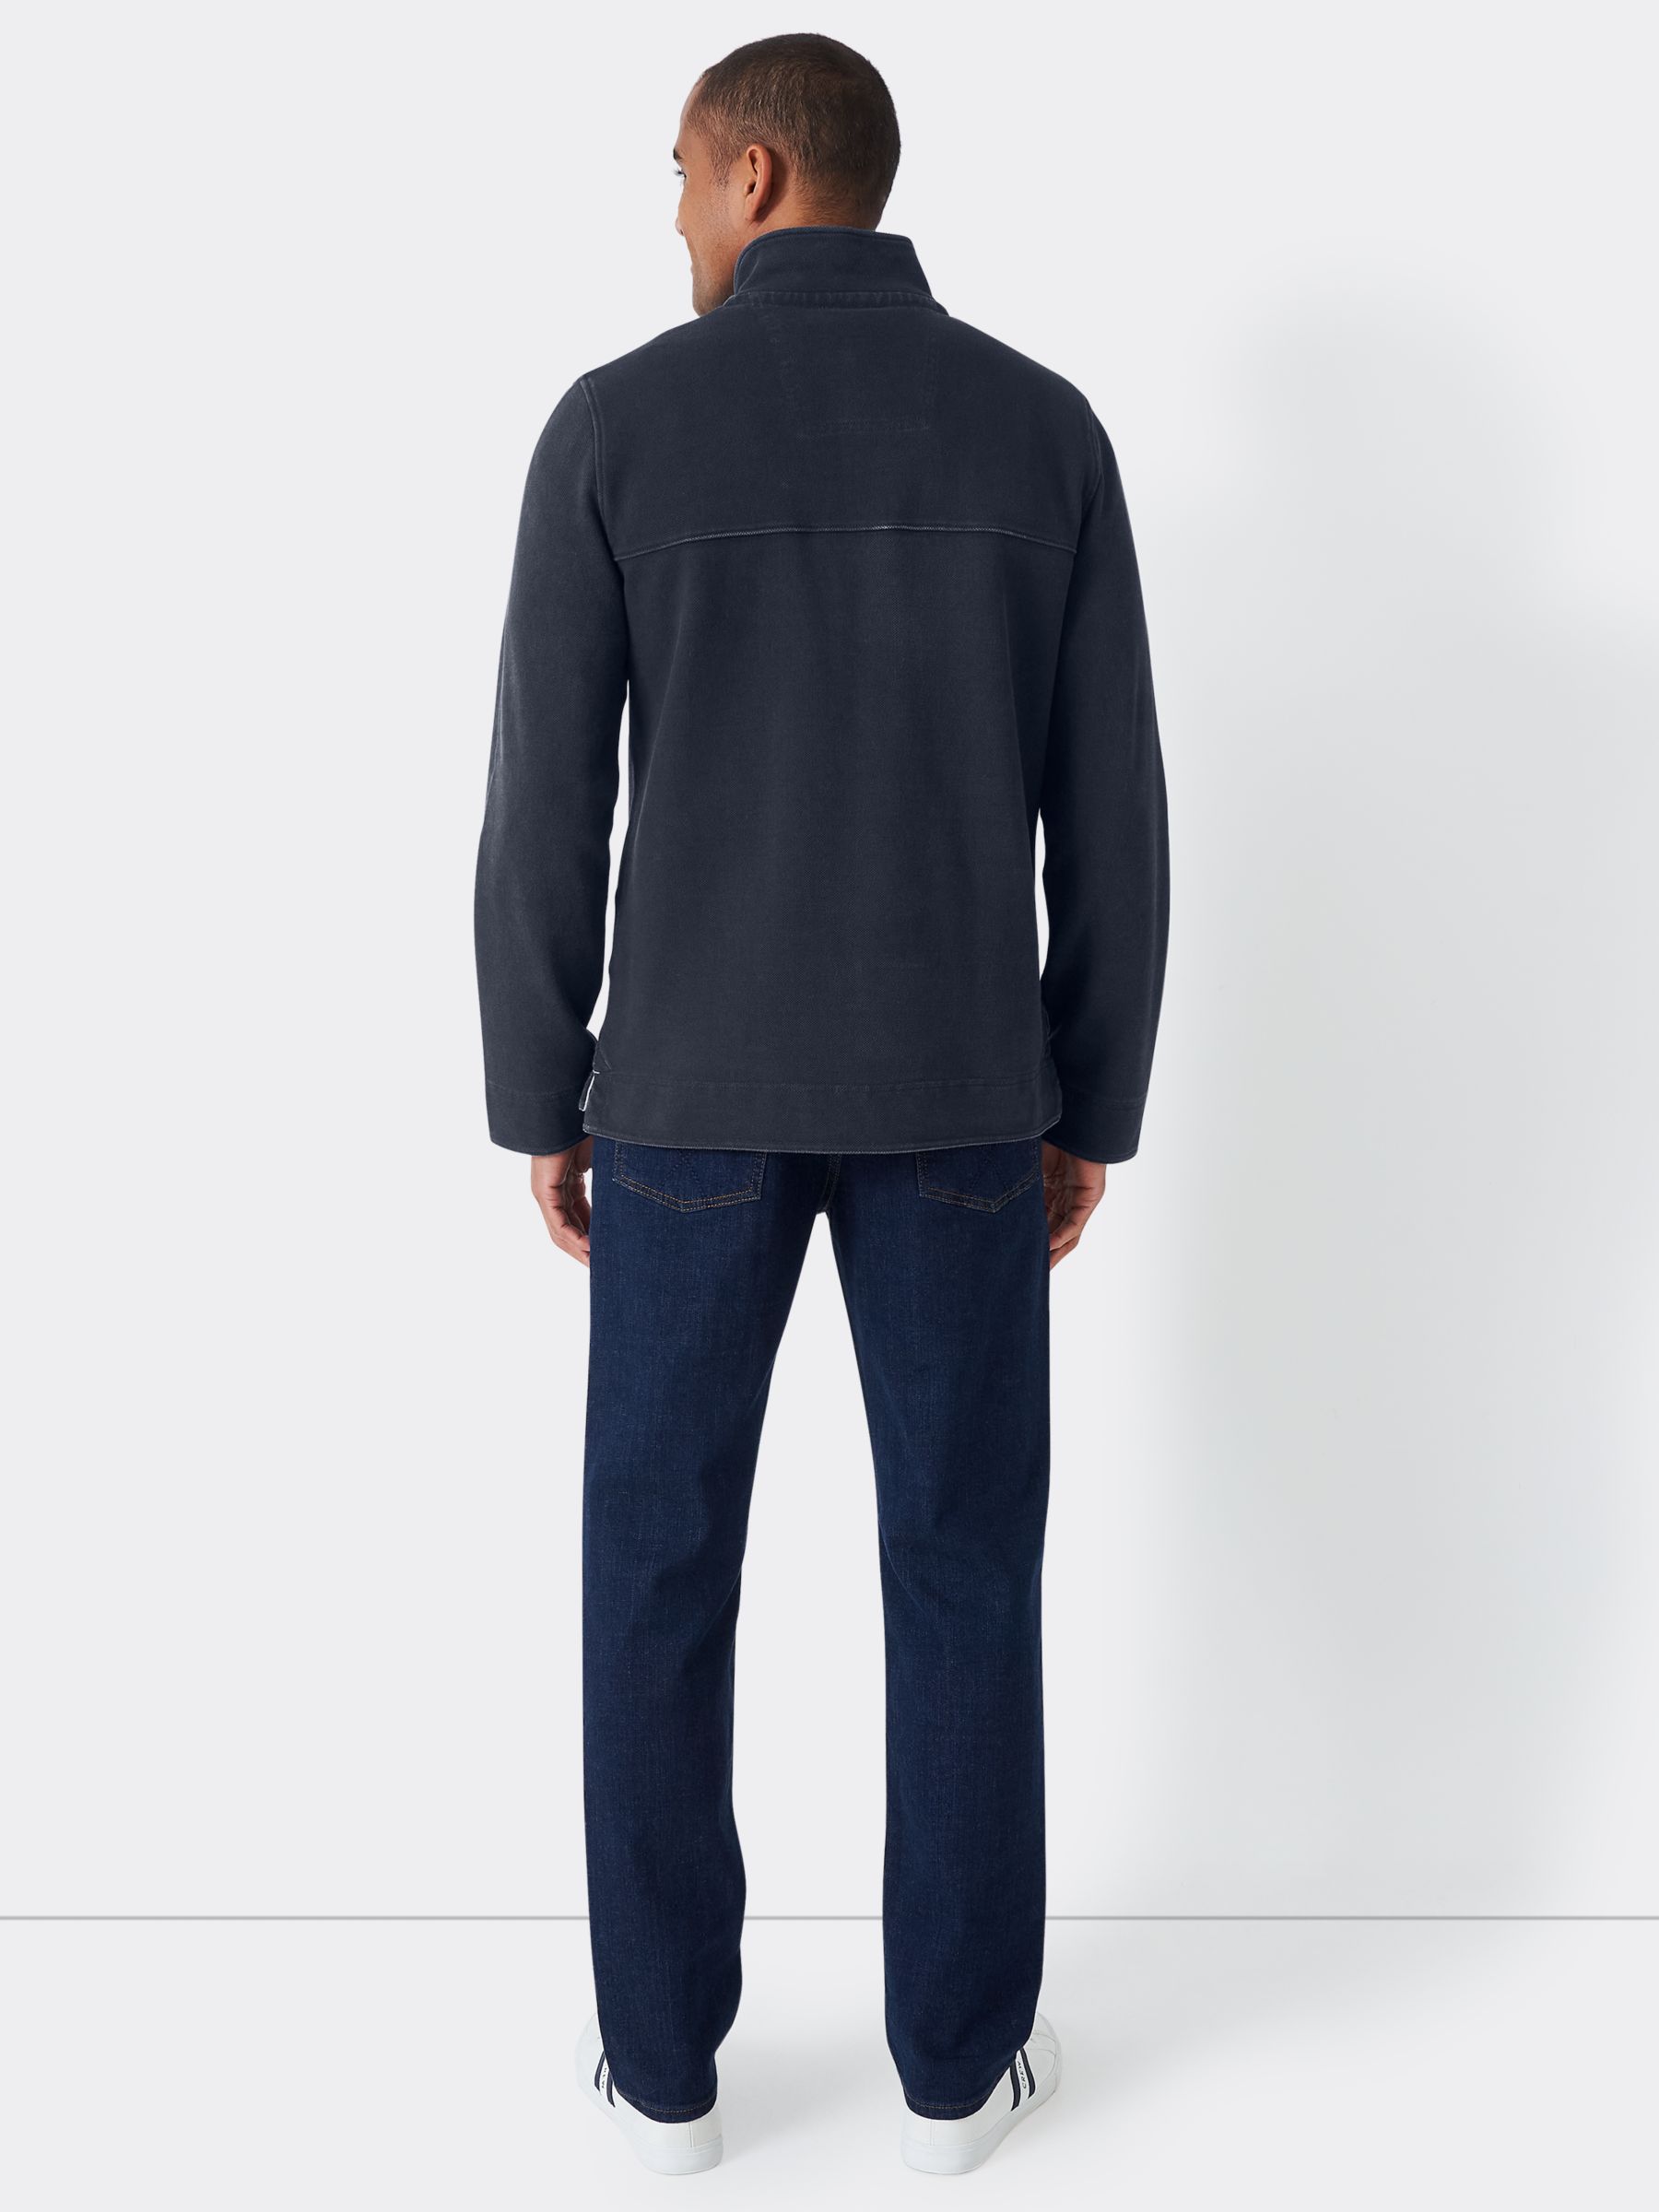 Buy Crew Clothing Padstow Pique Long Sleeve Sweatshirt Online at johnlewis.com